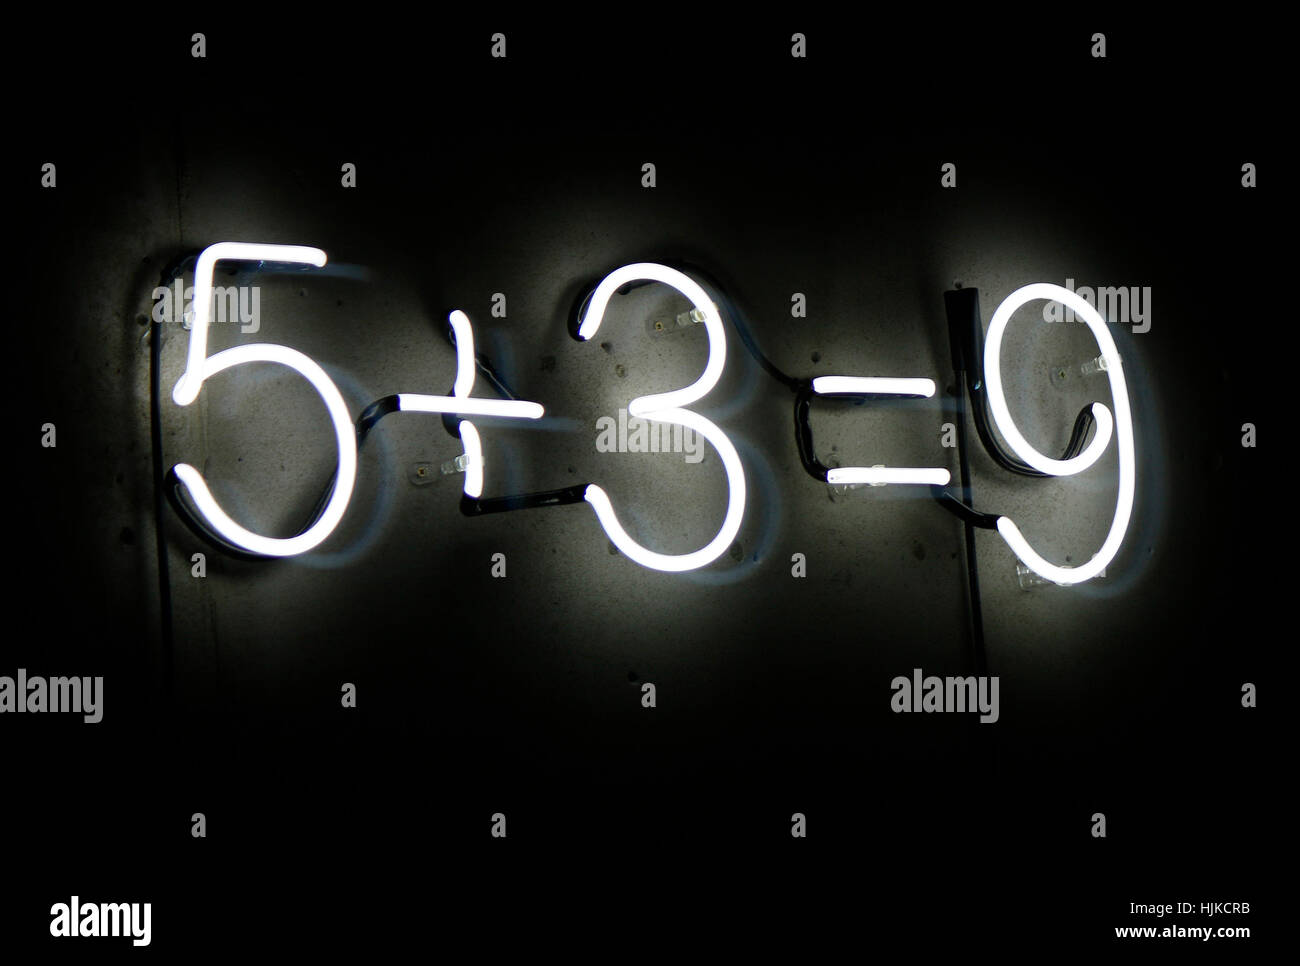 Neonschrift: "5+3=9", Berlin Stock Photo - Alamy